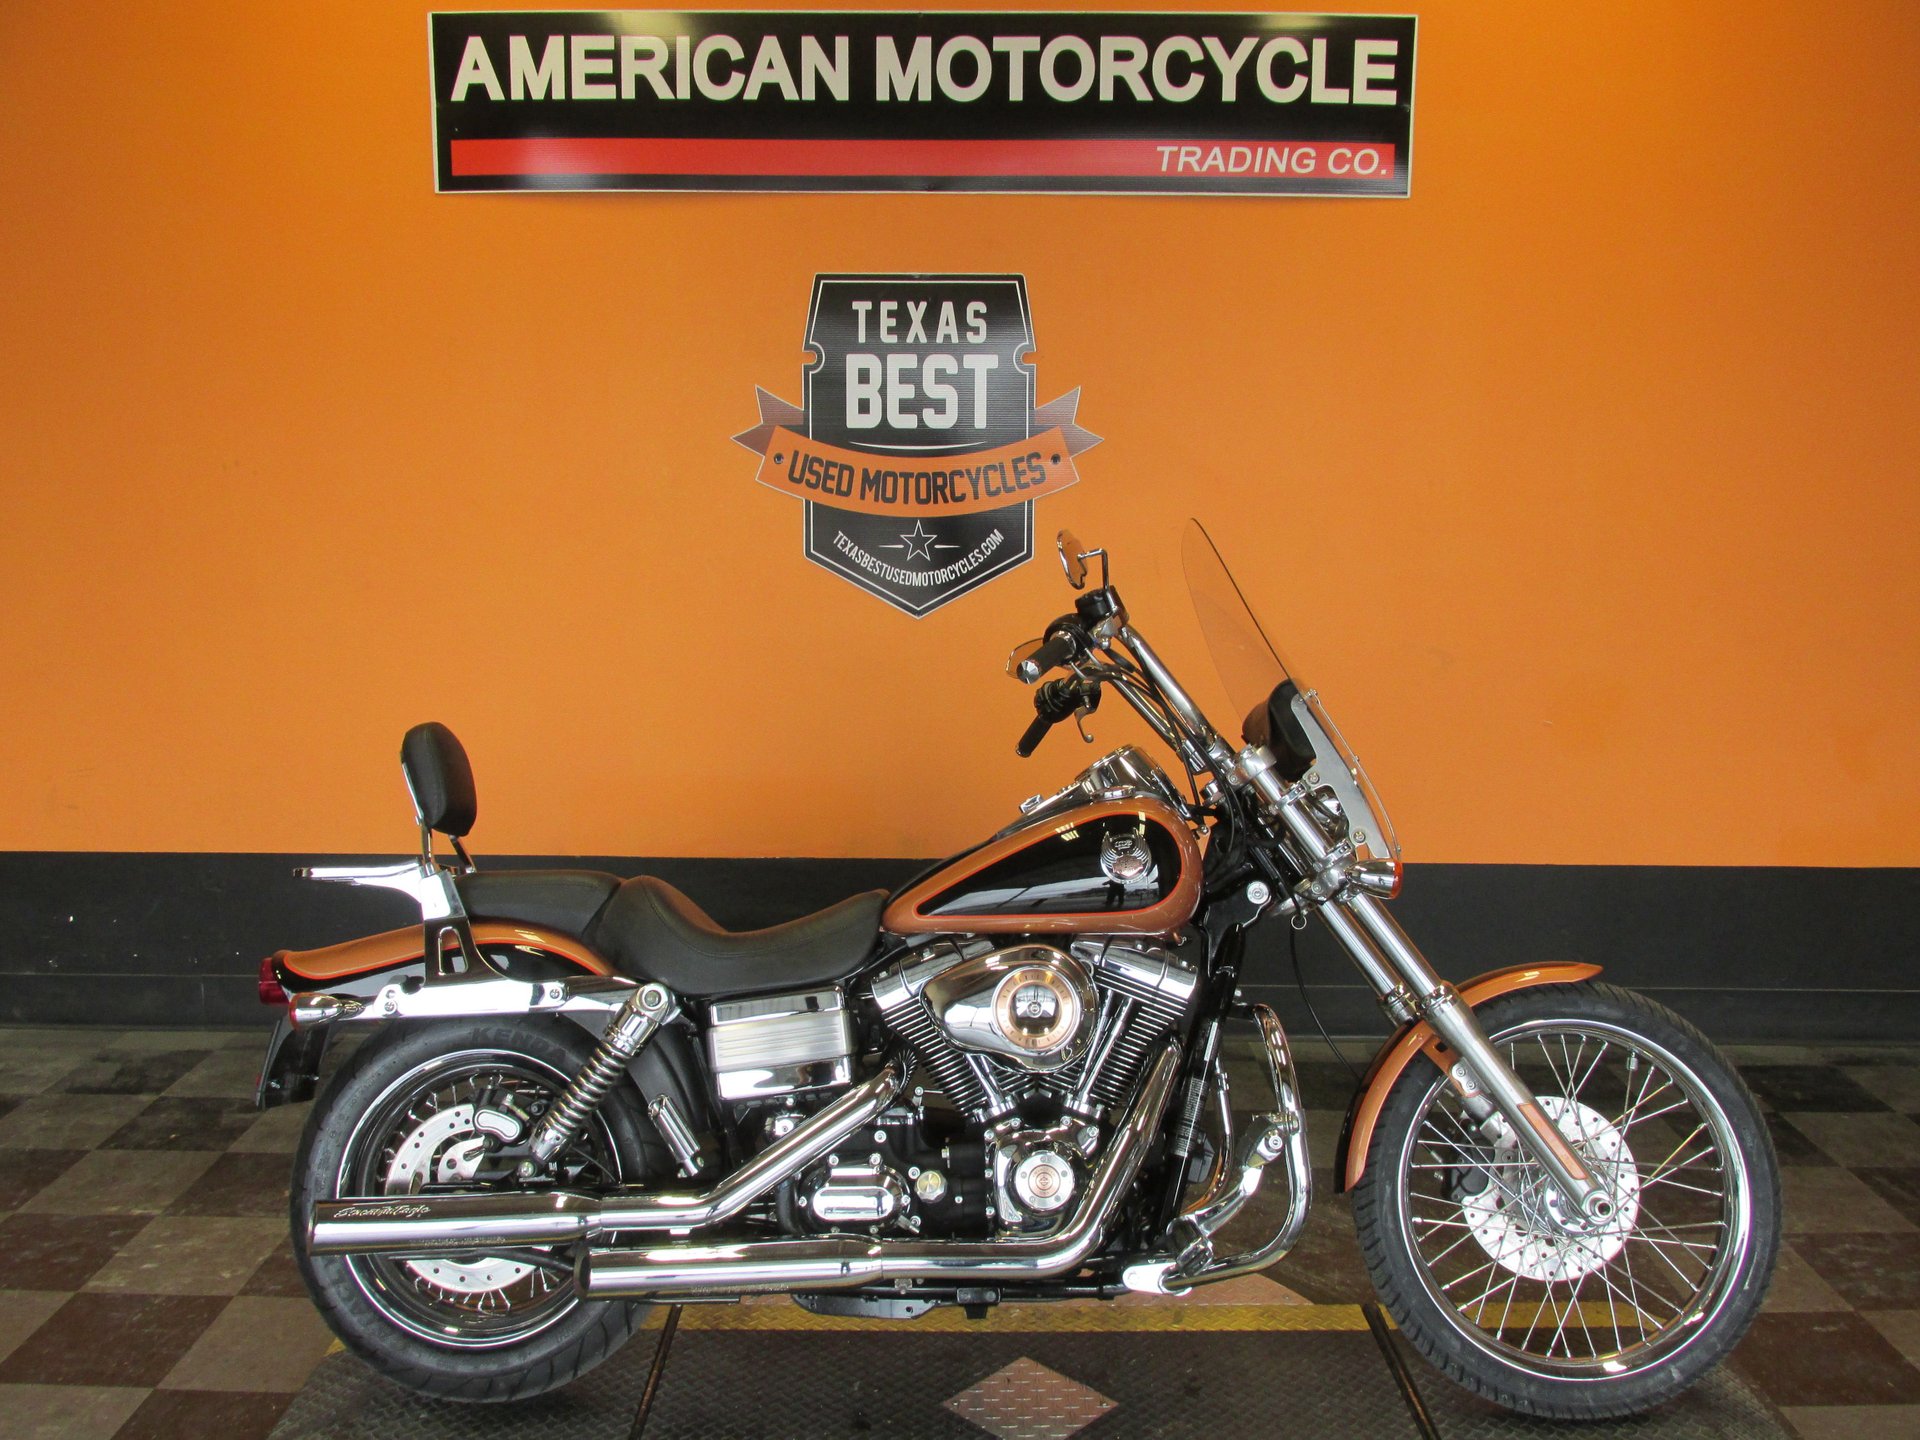 2008 Harley Davidson Dyna Wide Glide American Motorcycle Trading Company Used Harley Davidson Motorcycles